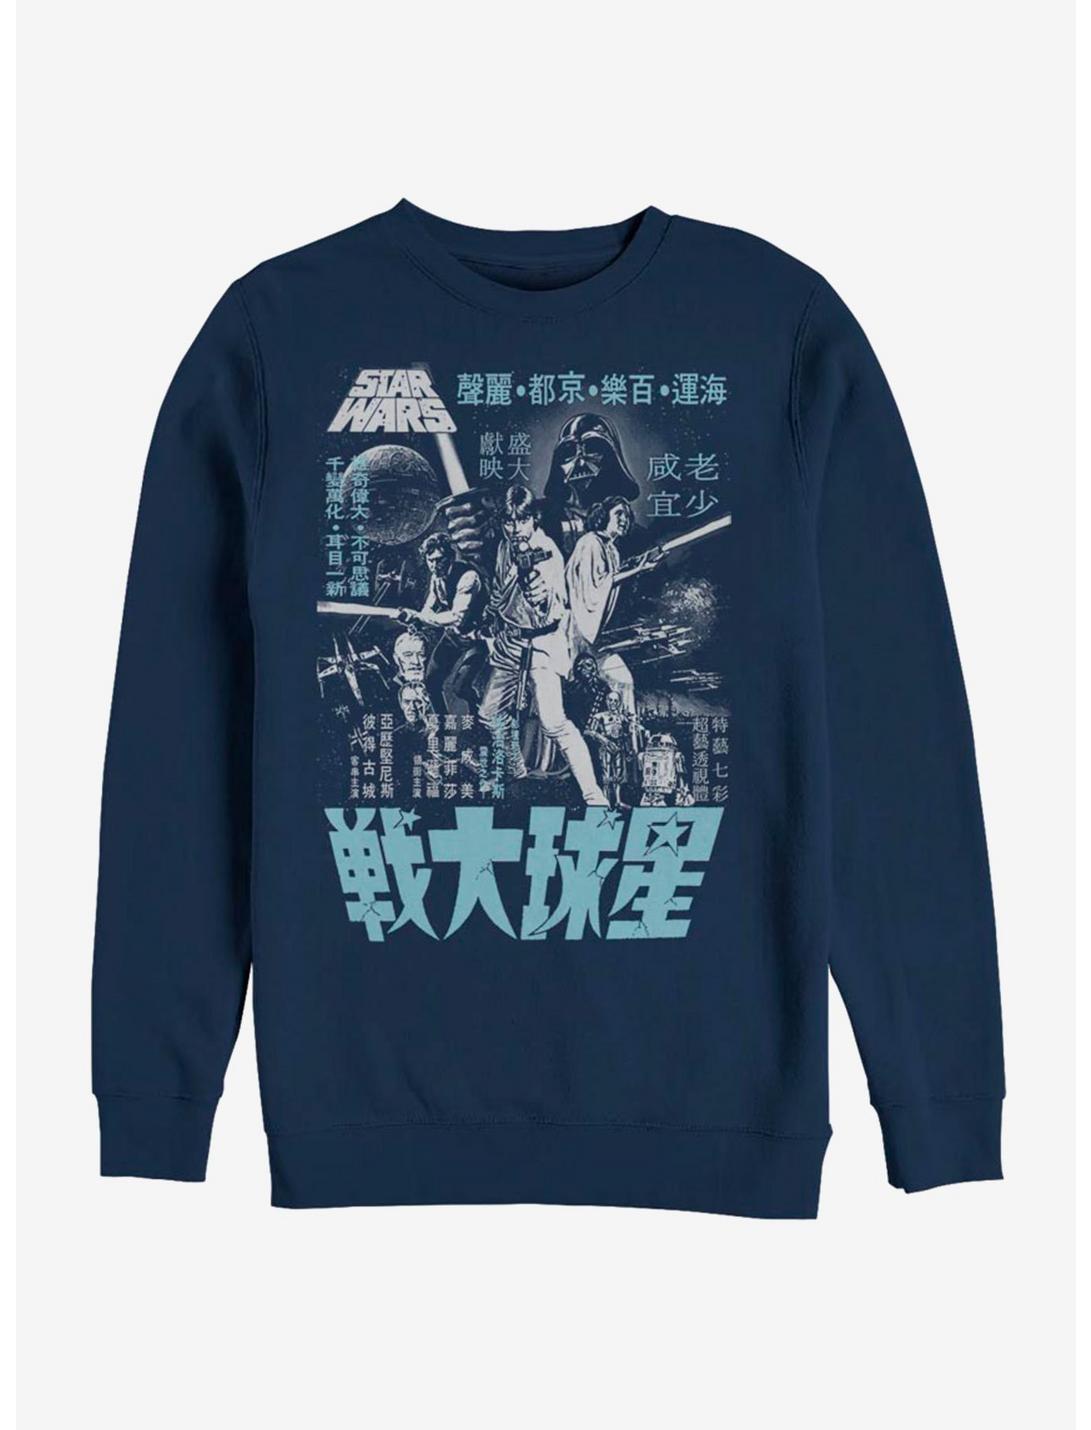 Star Wars Japanese Text Poster Sweatshirt, NAVY, hi-res